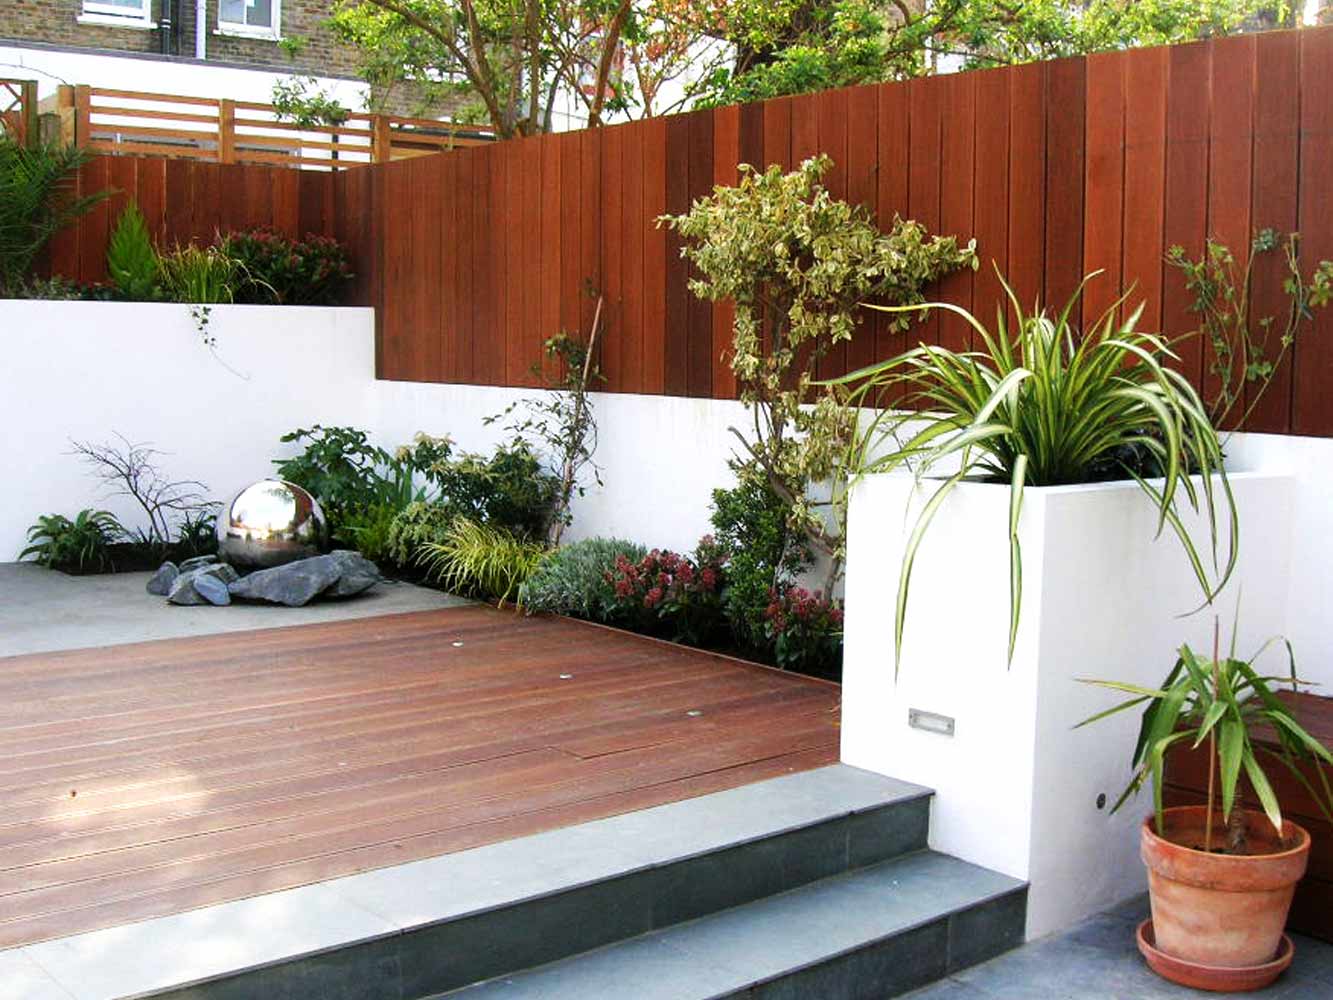 Izabela Garden Design – Garden Design and Landscaping services in ...